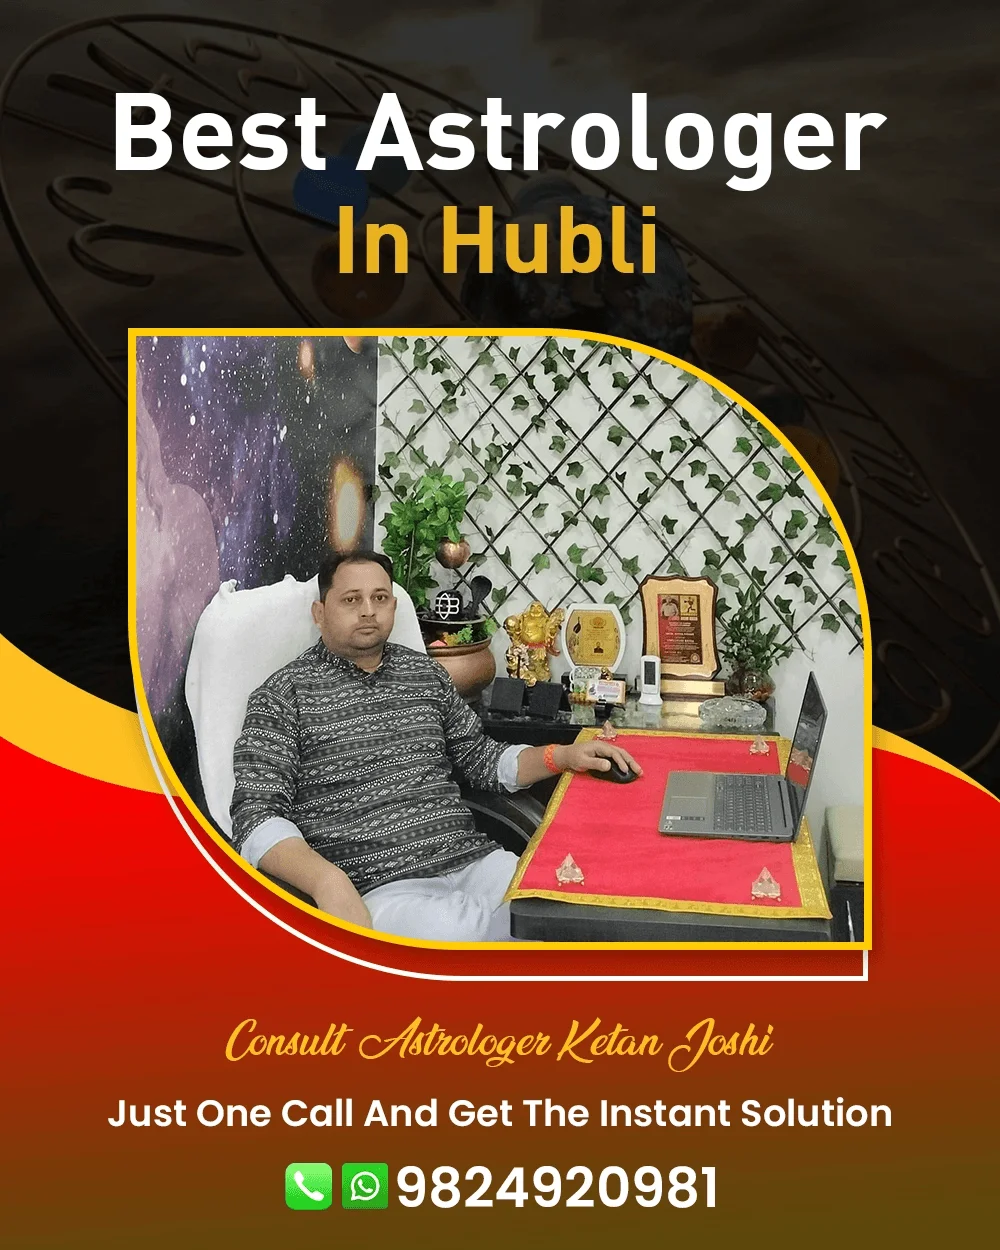 Best Astrologer In Hubli